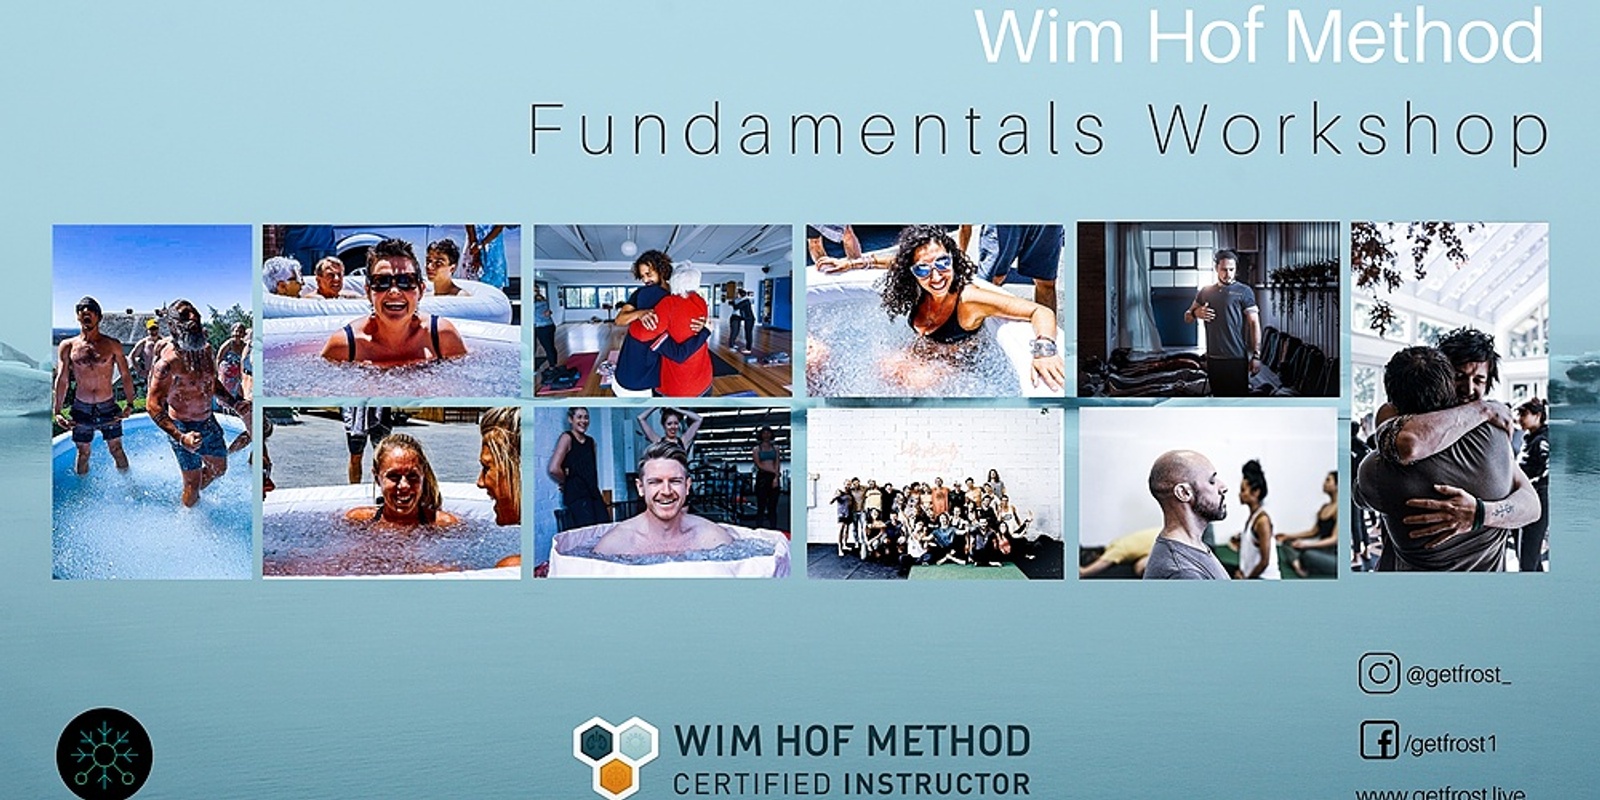 Learn the Wim Hof Method  Certified Fundamentals Workshop